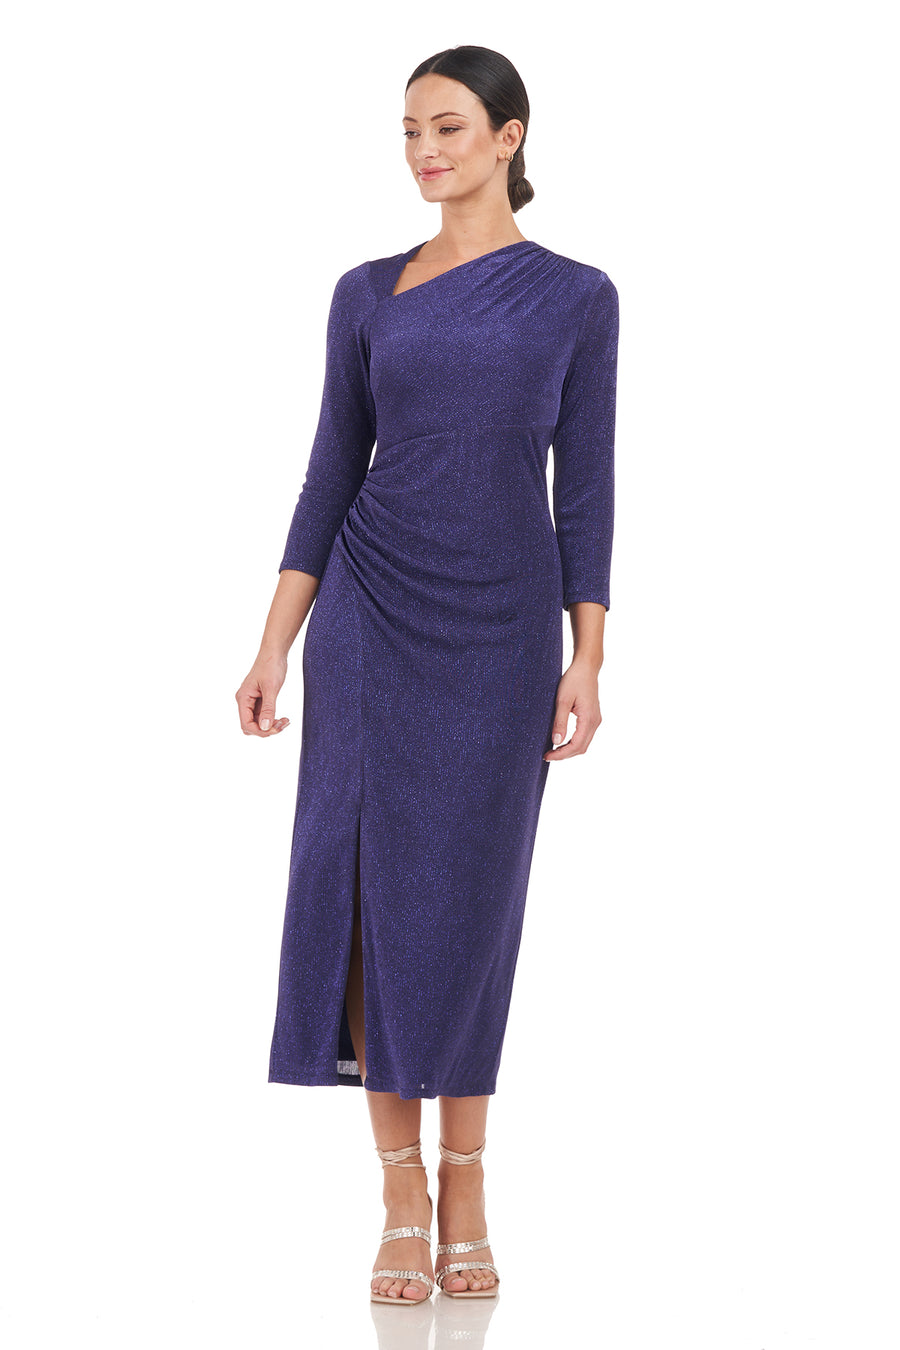 Violeta Knit Tea Length Dress